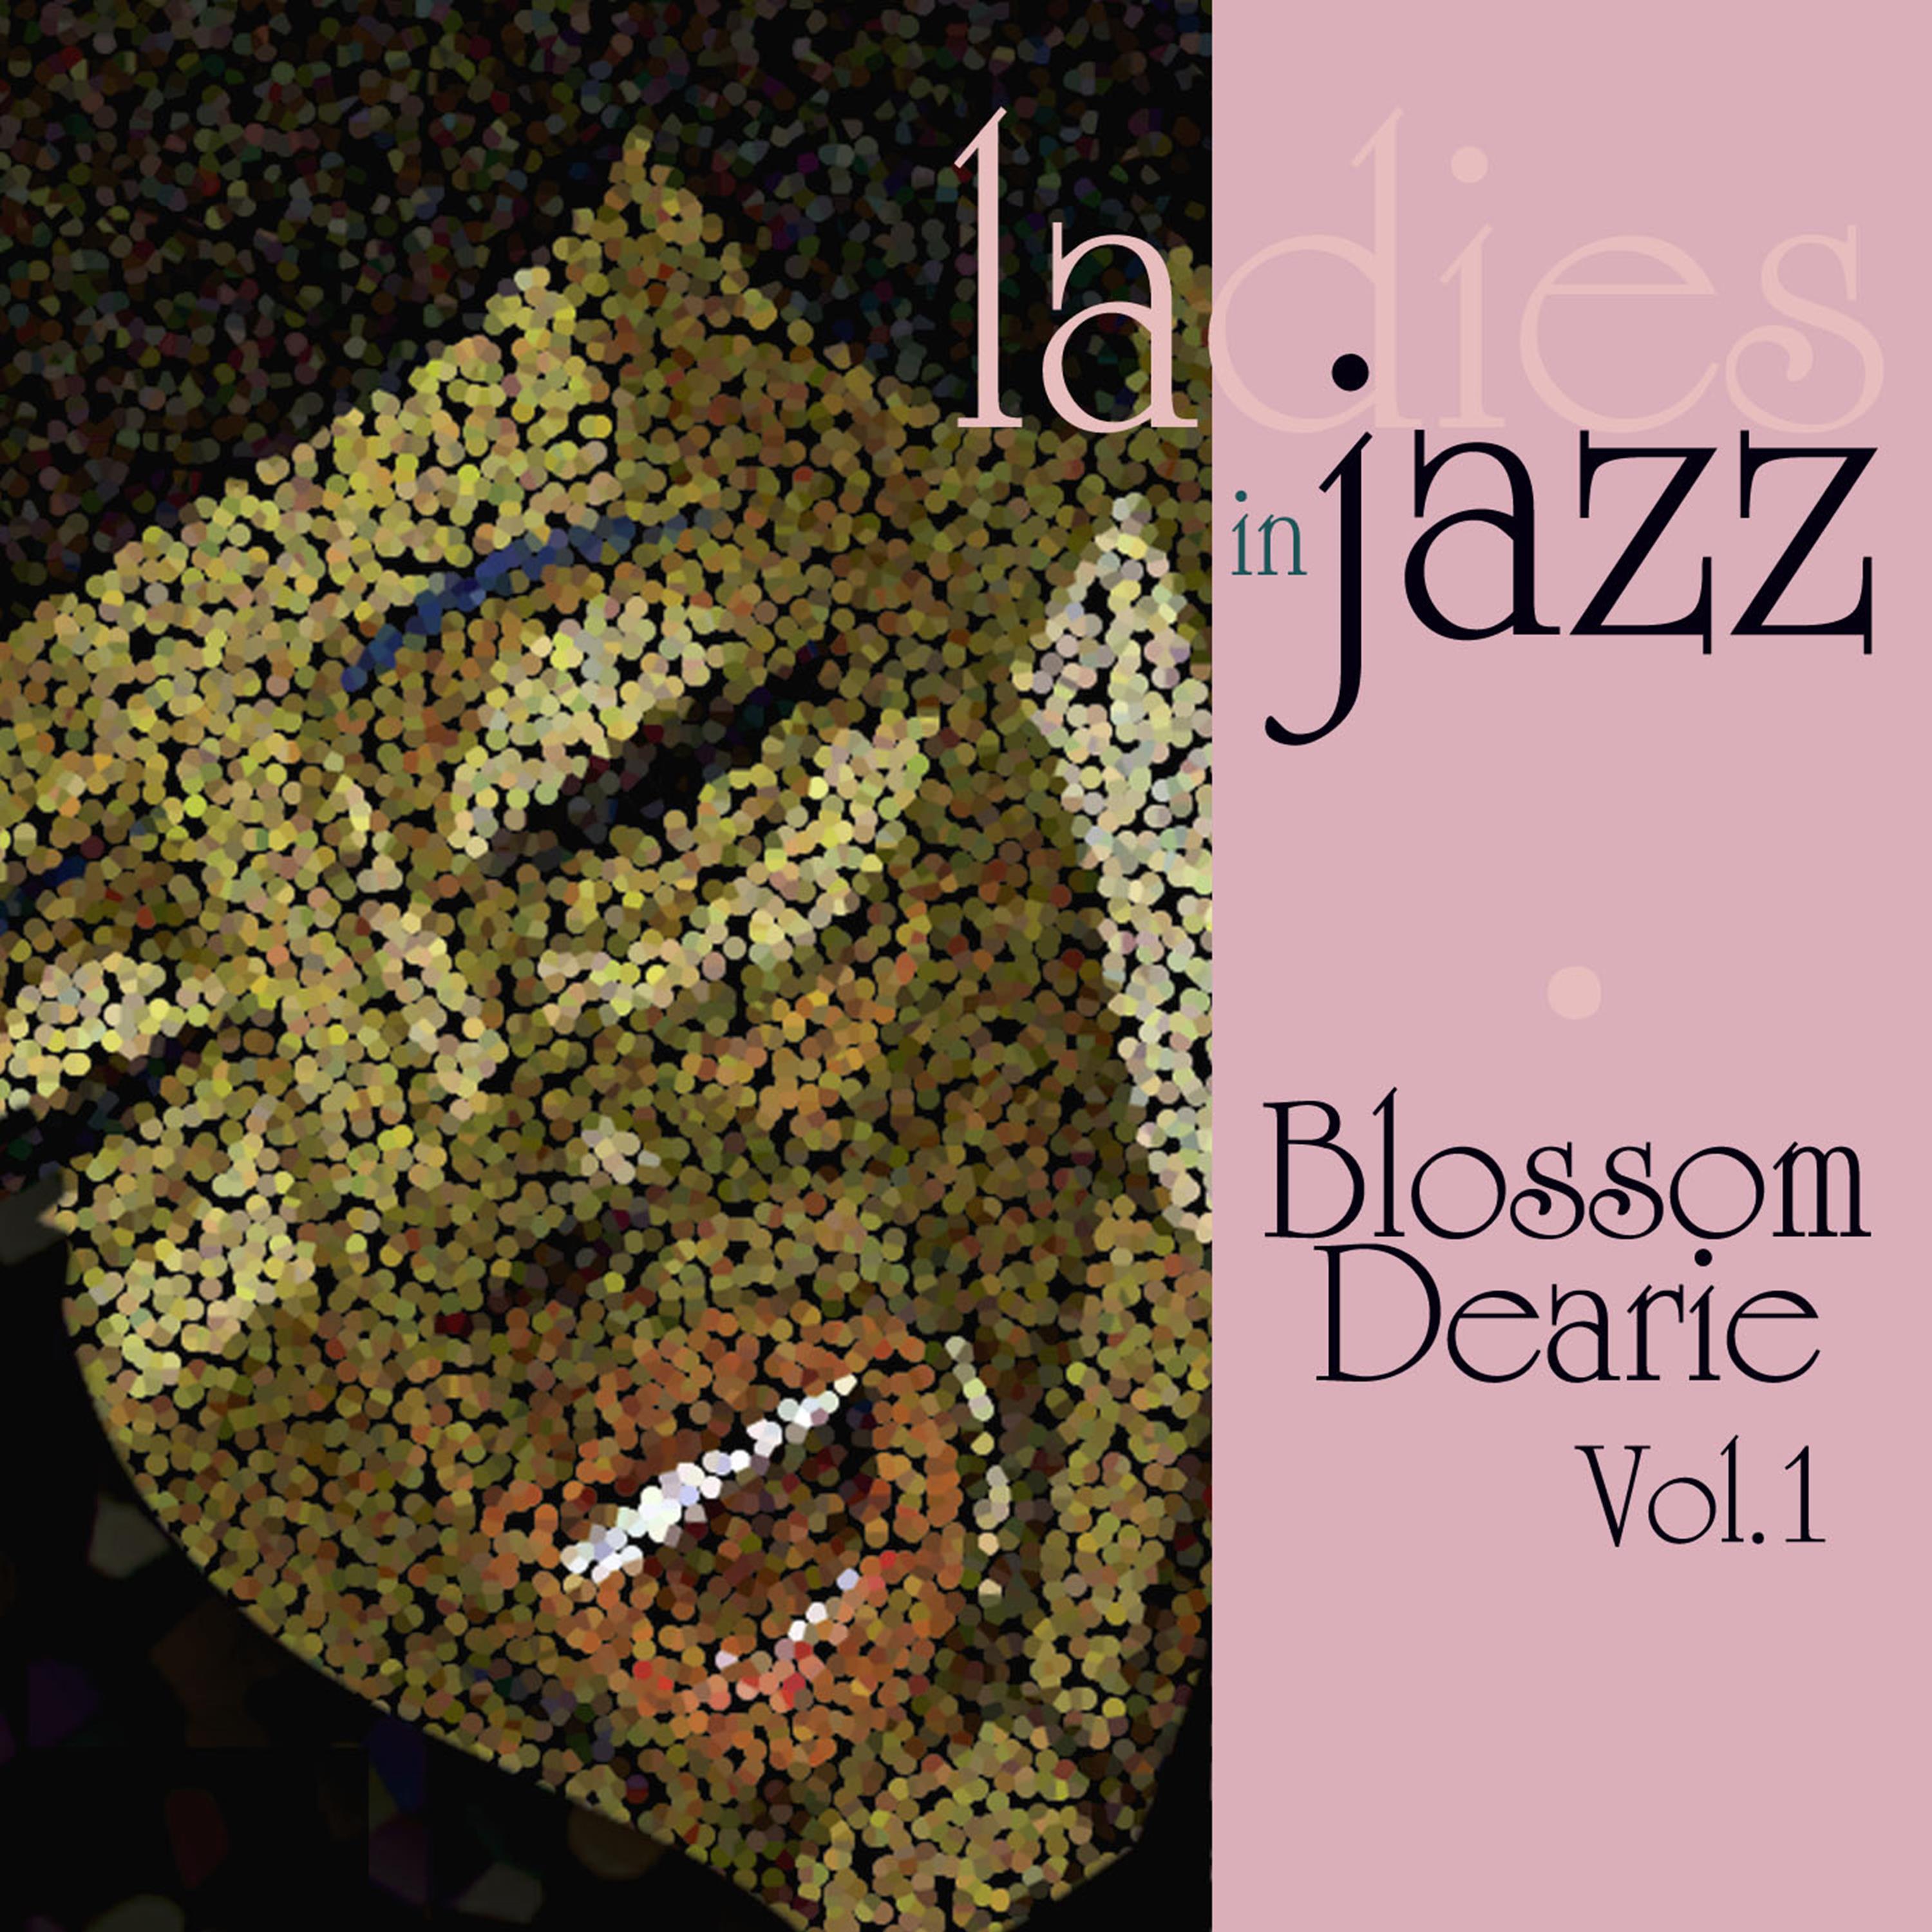 Ladies in Jazz - Blossom Dearie, Vol. 1